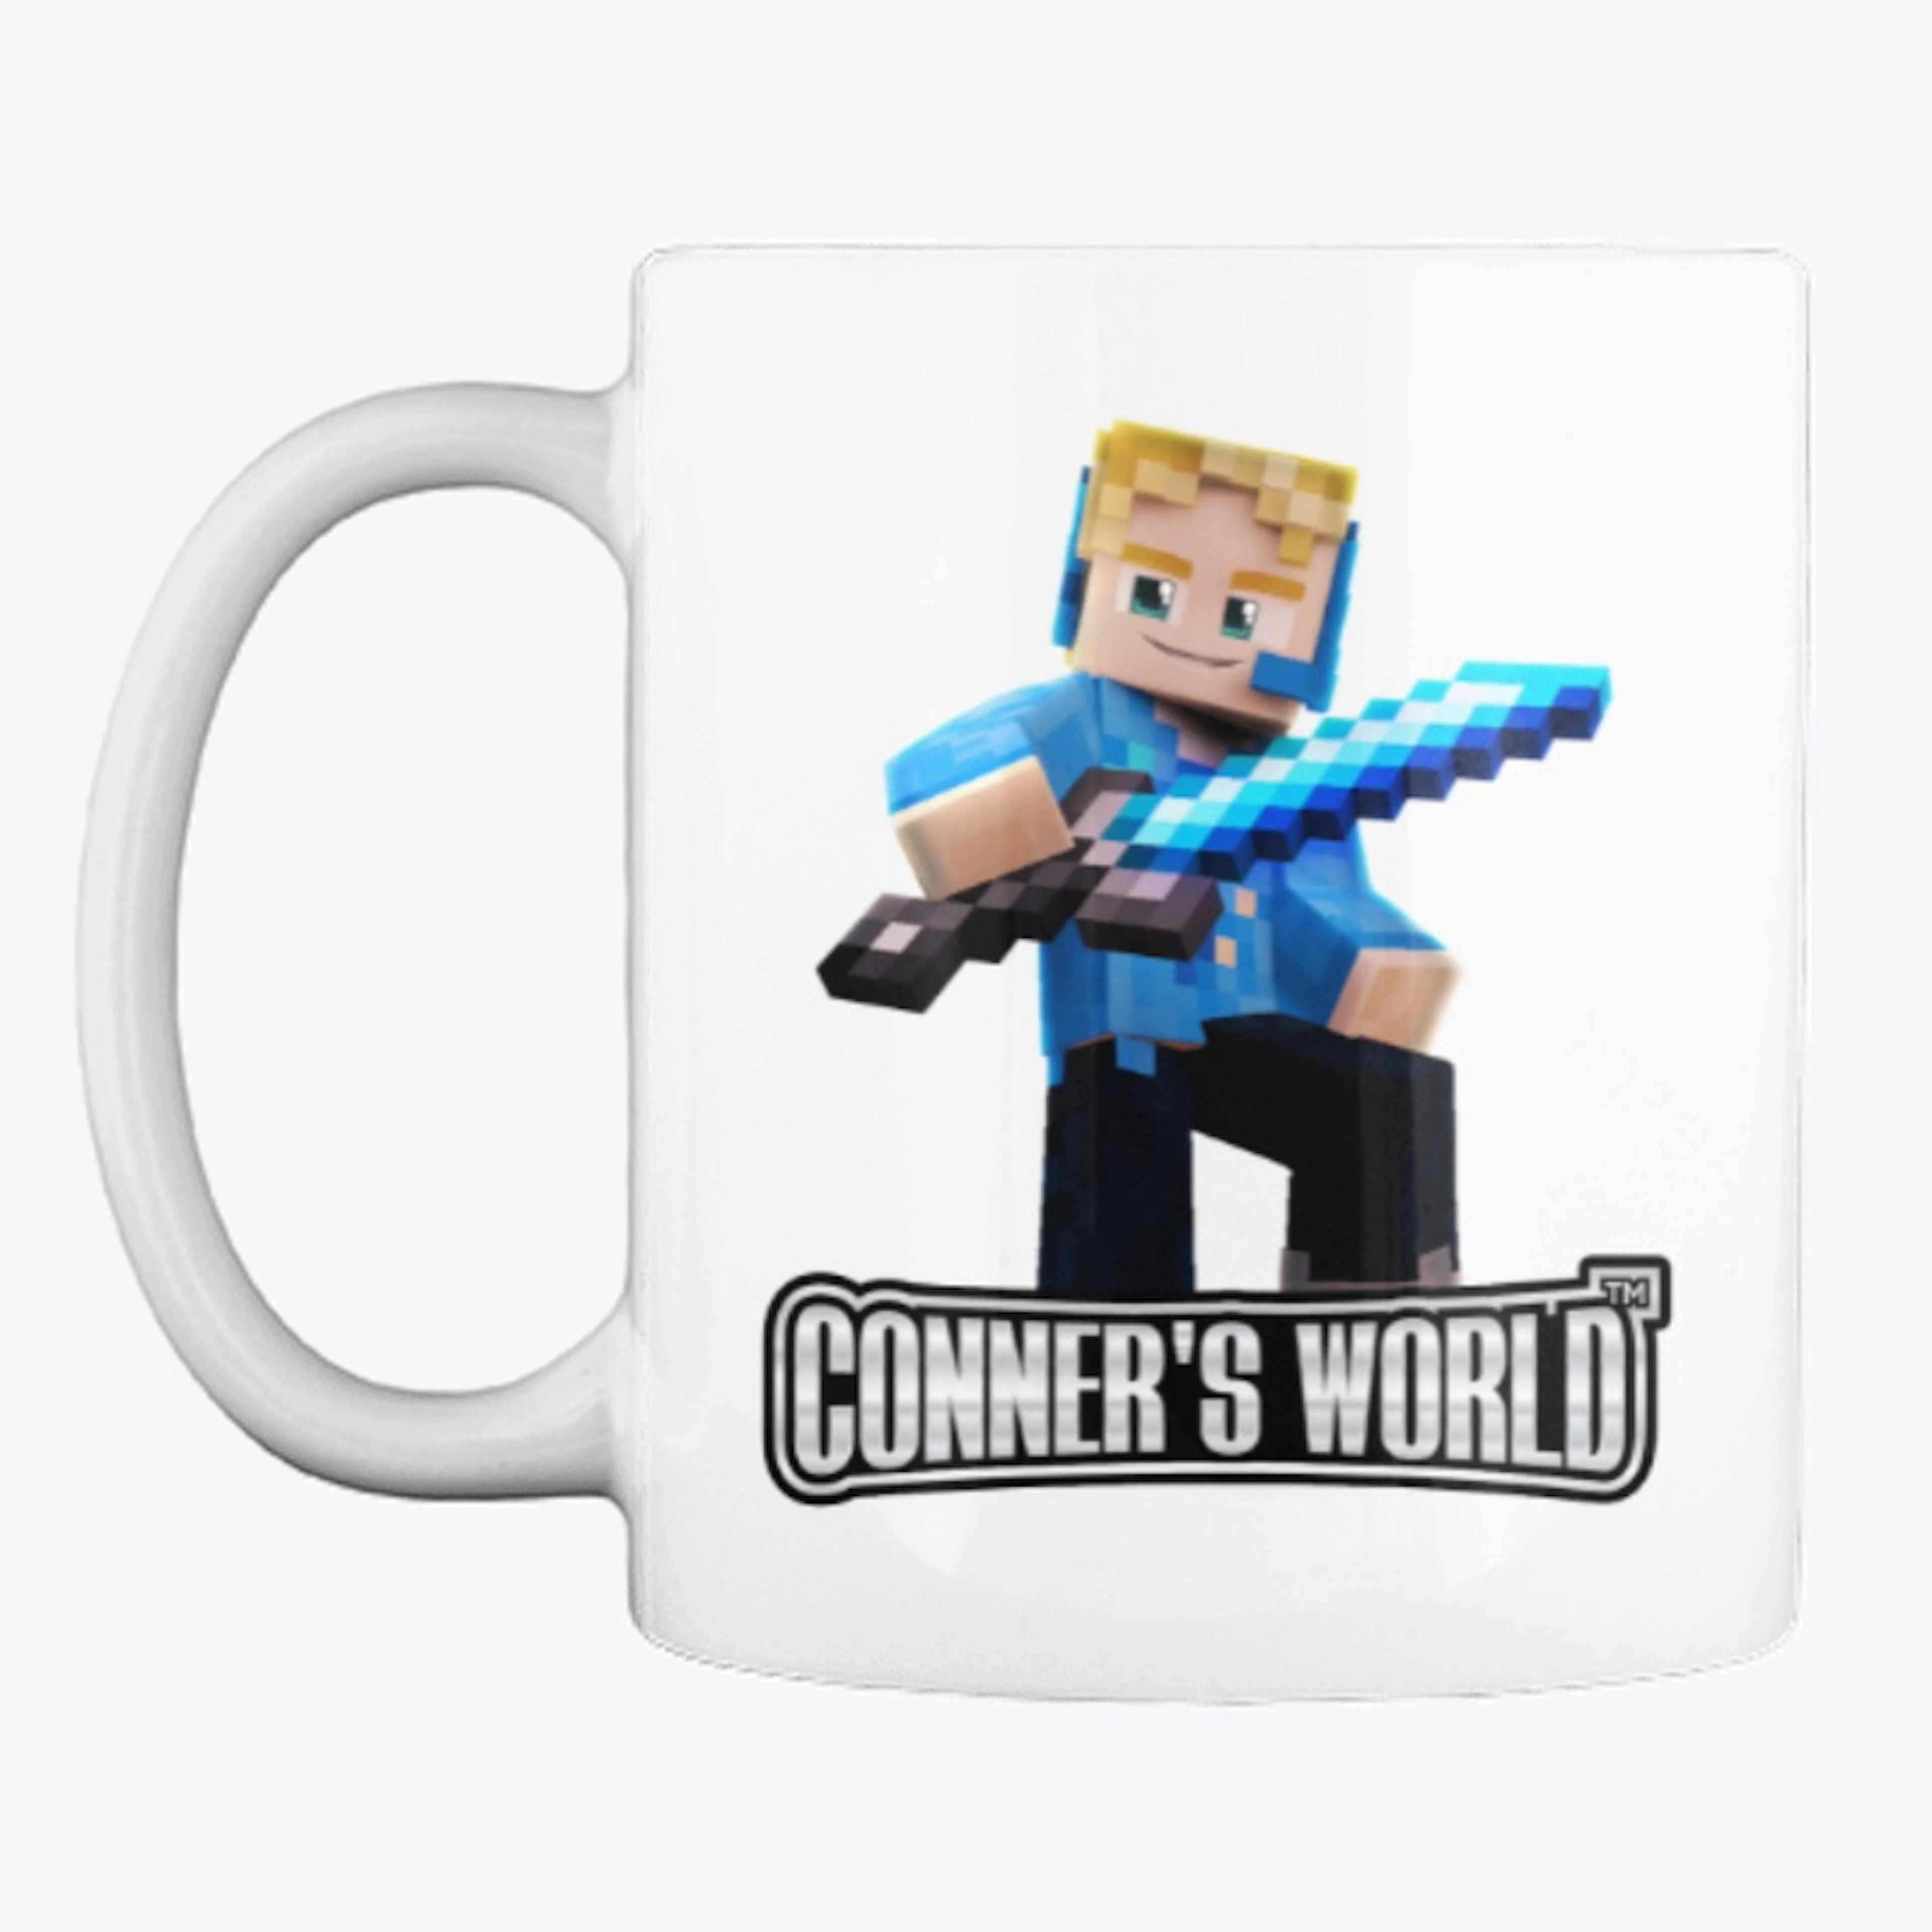 Official Conner's World Mug